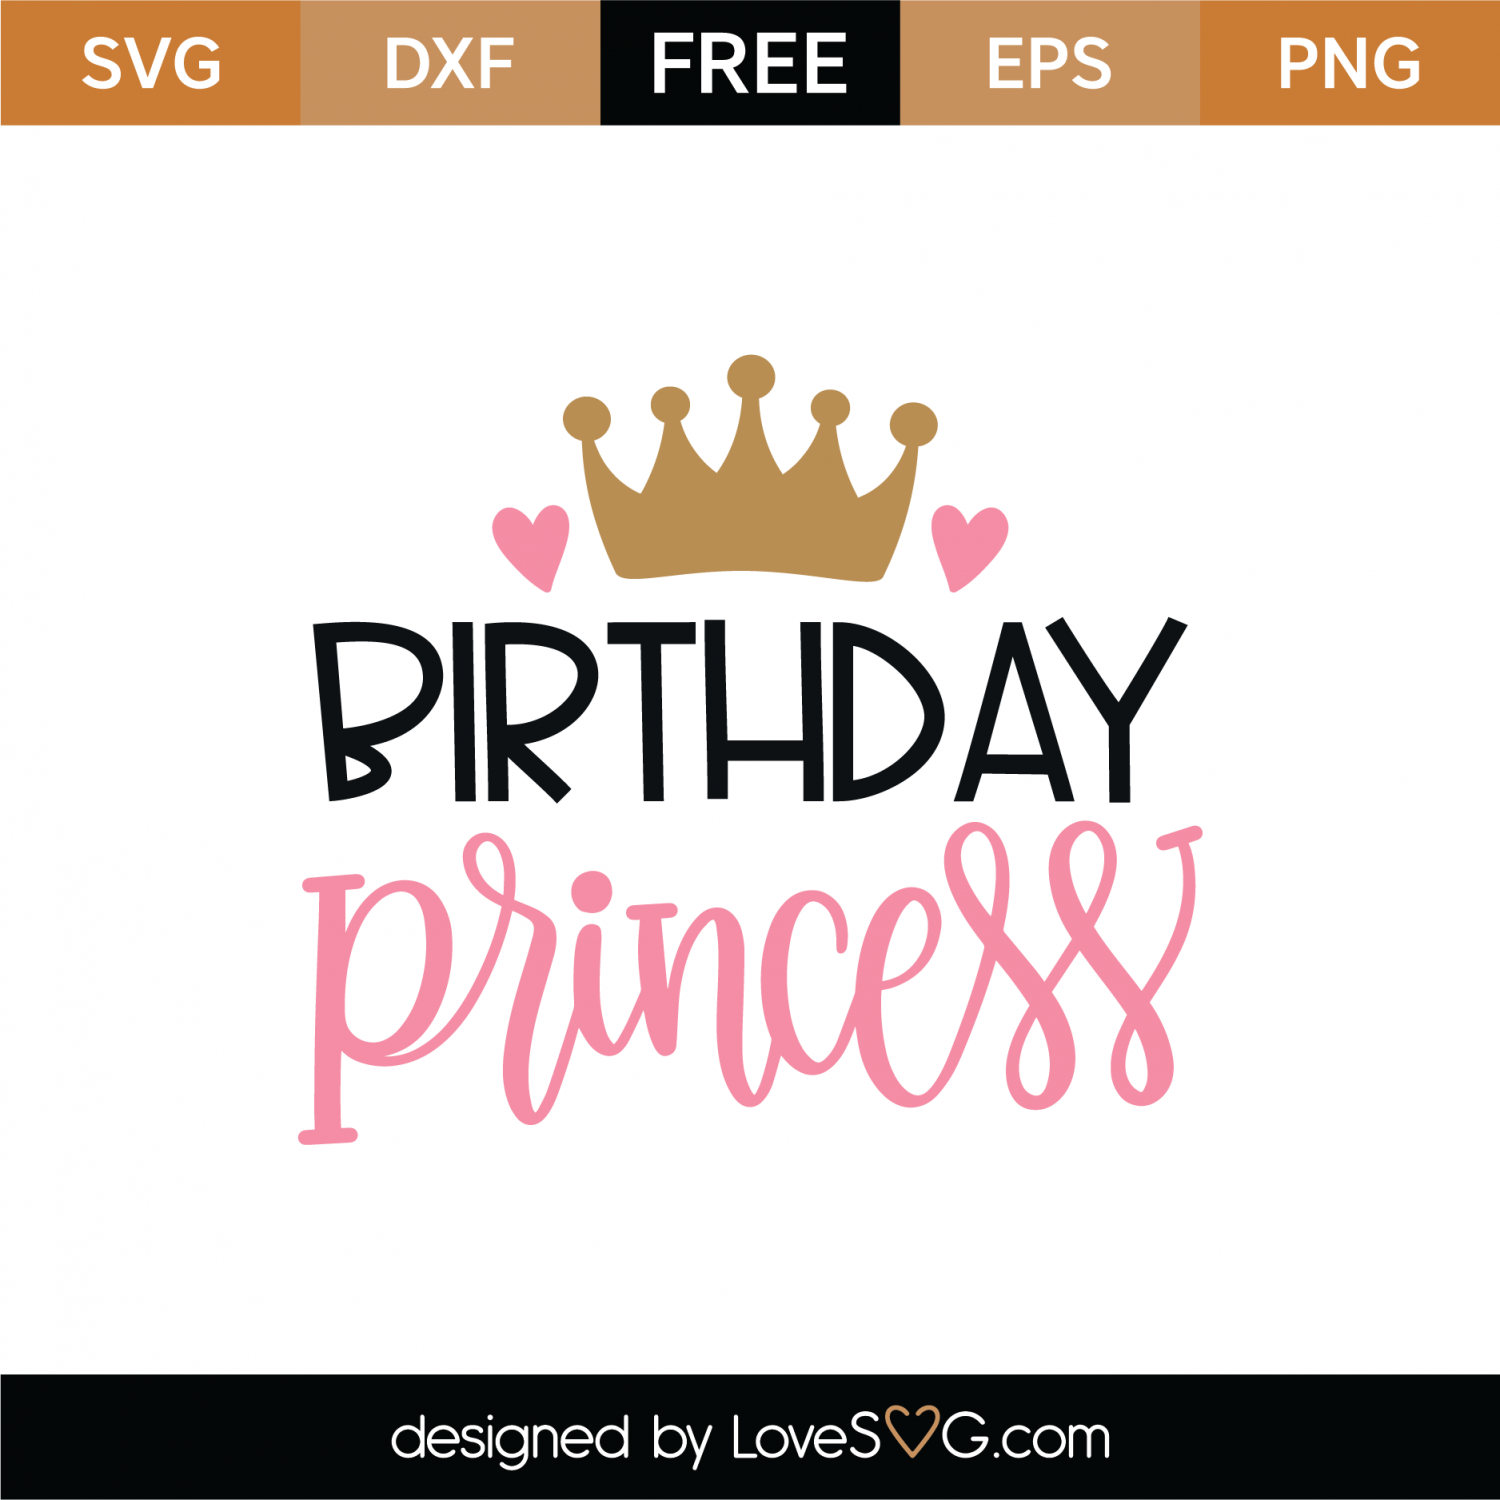 Download Free Birthday Princess SVG Cut File | Lovesvg.com